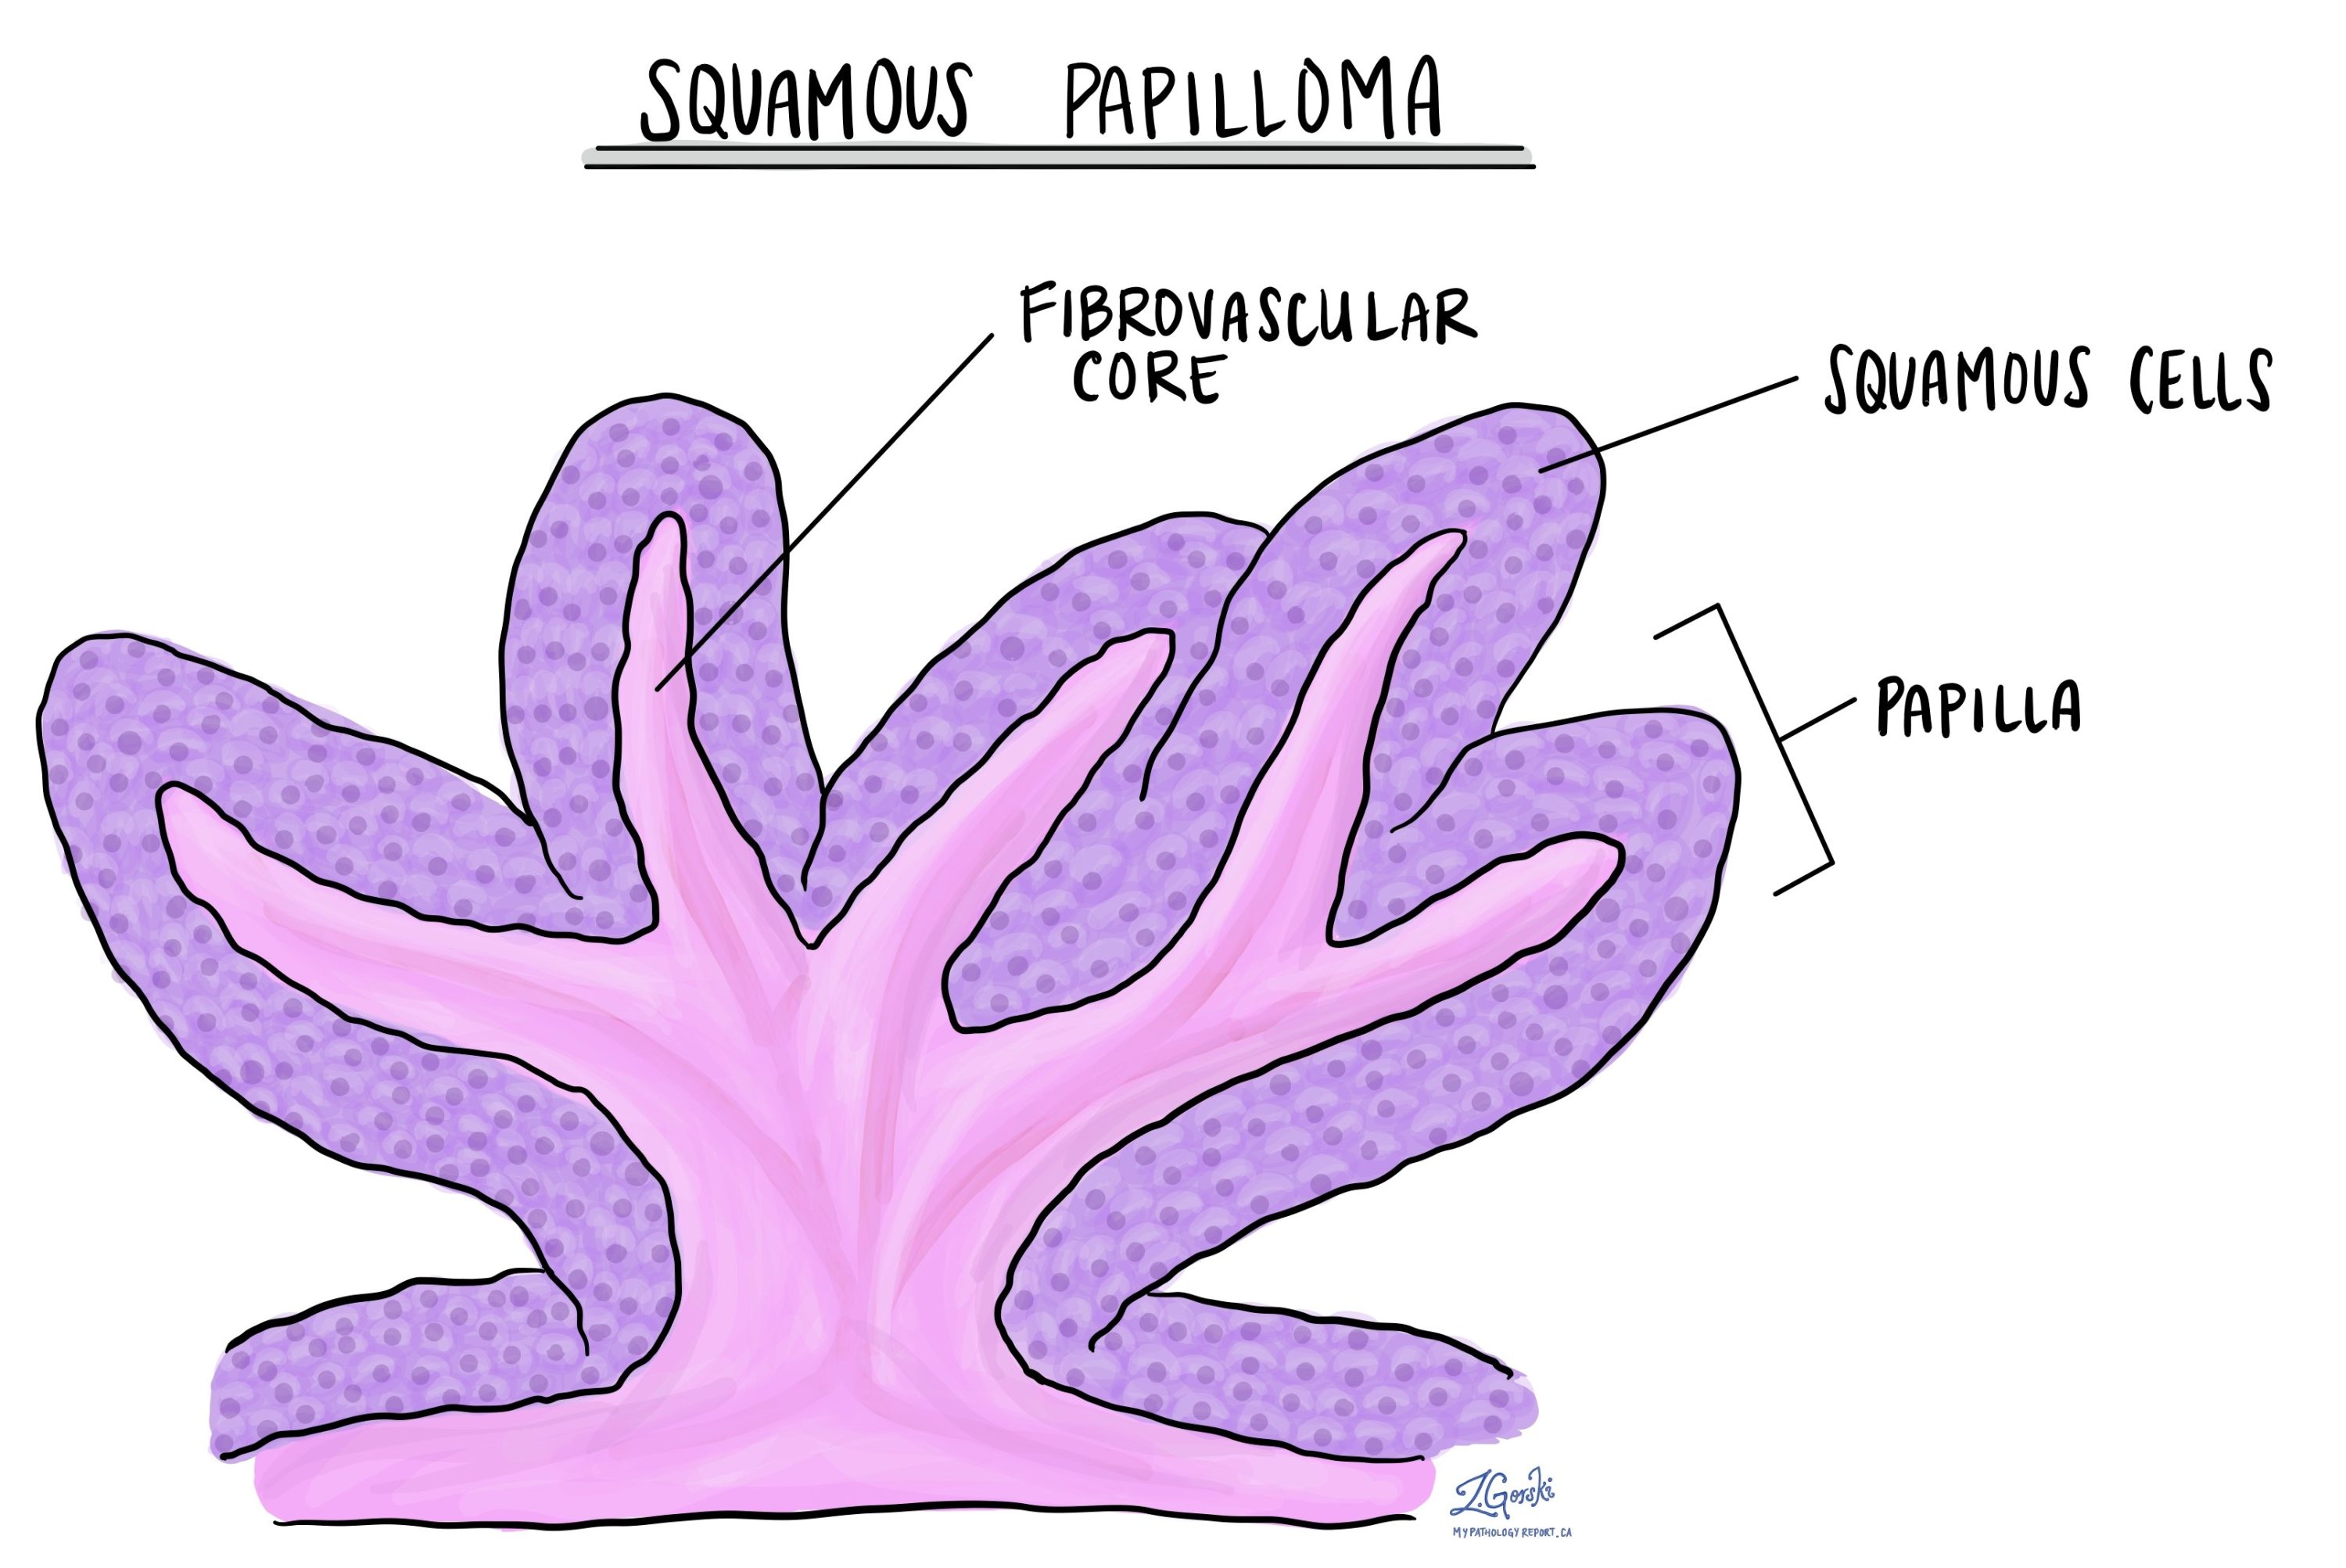 Squamous papilloma in mouth. Squamous papilloma of tongue histology